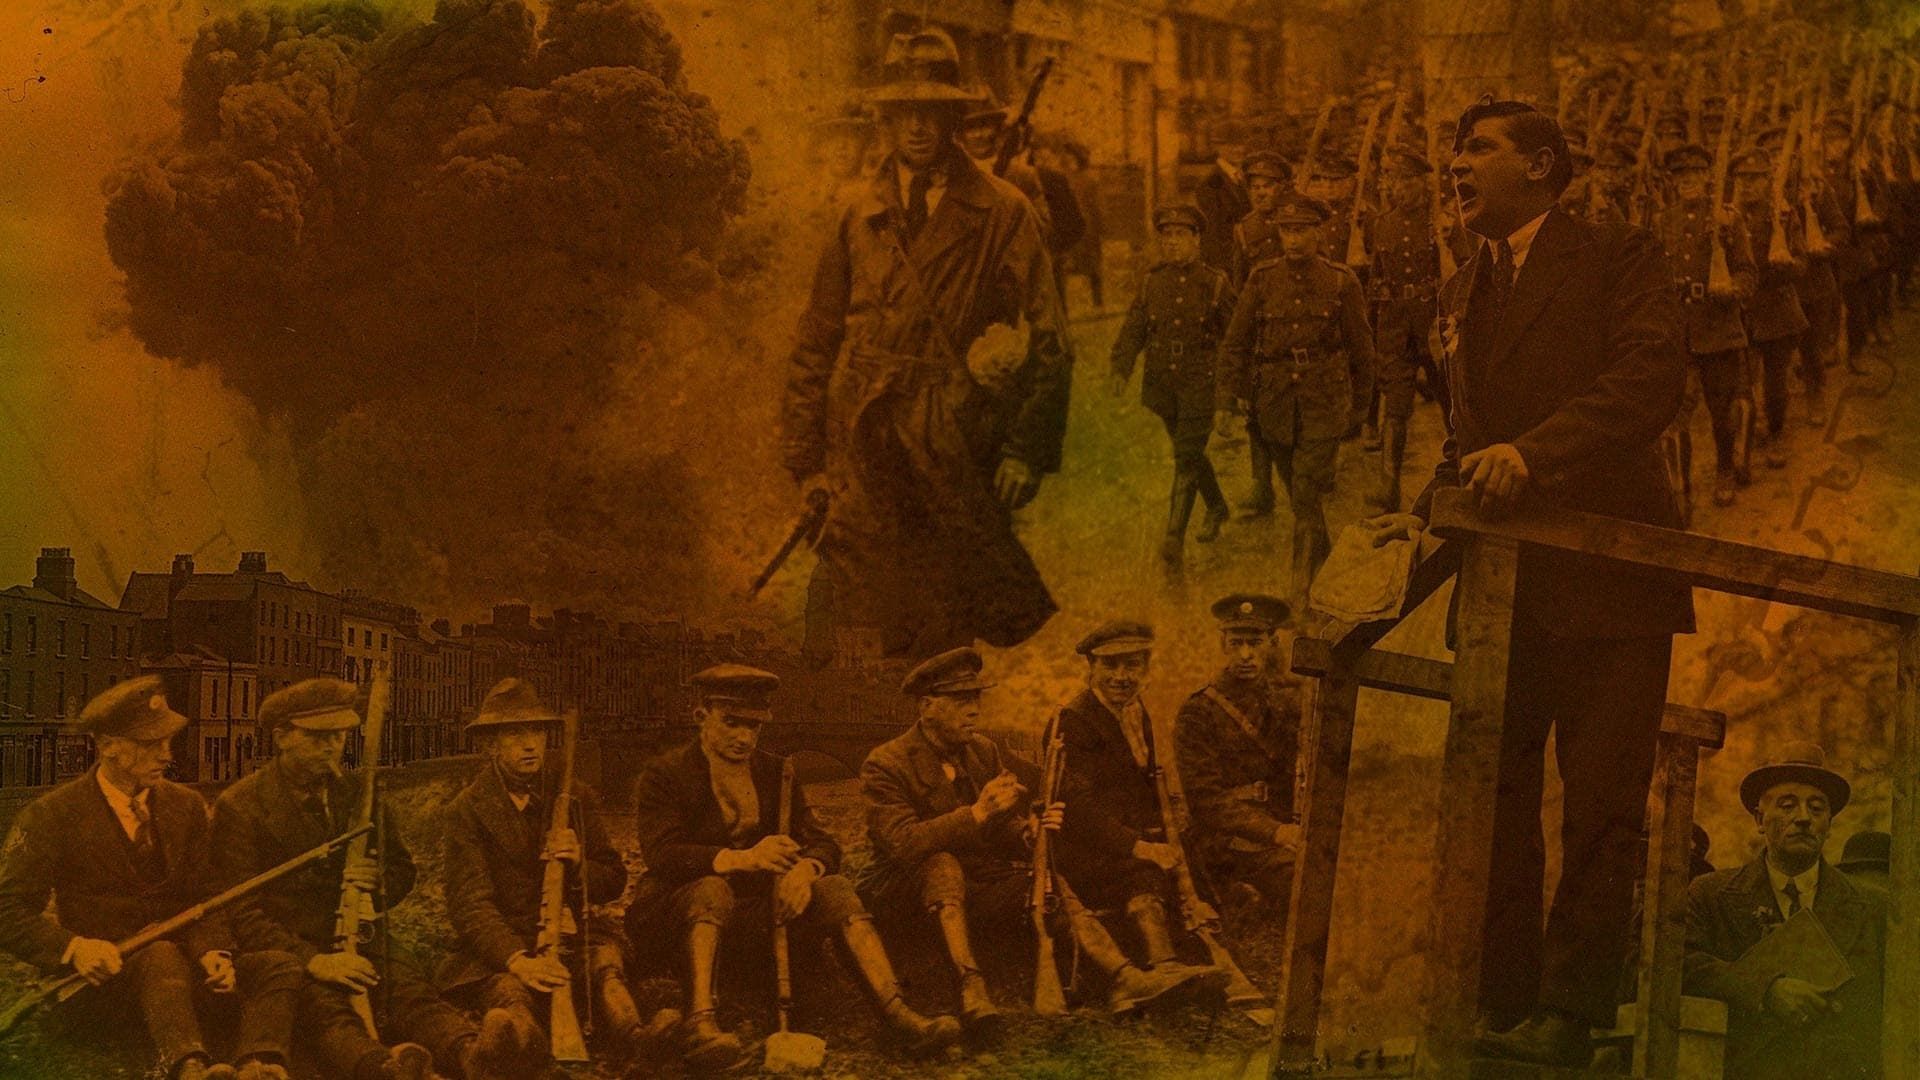 The Irish Civil War background